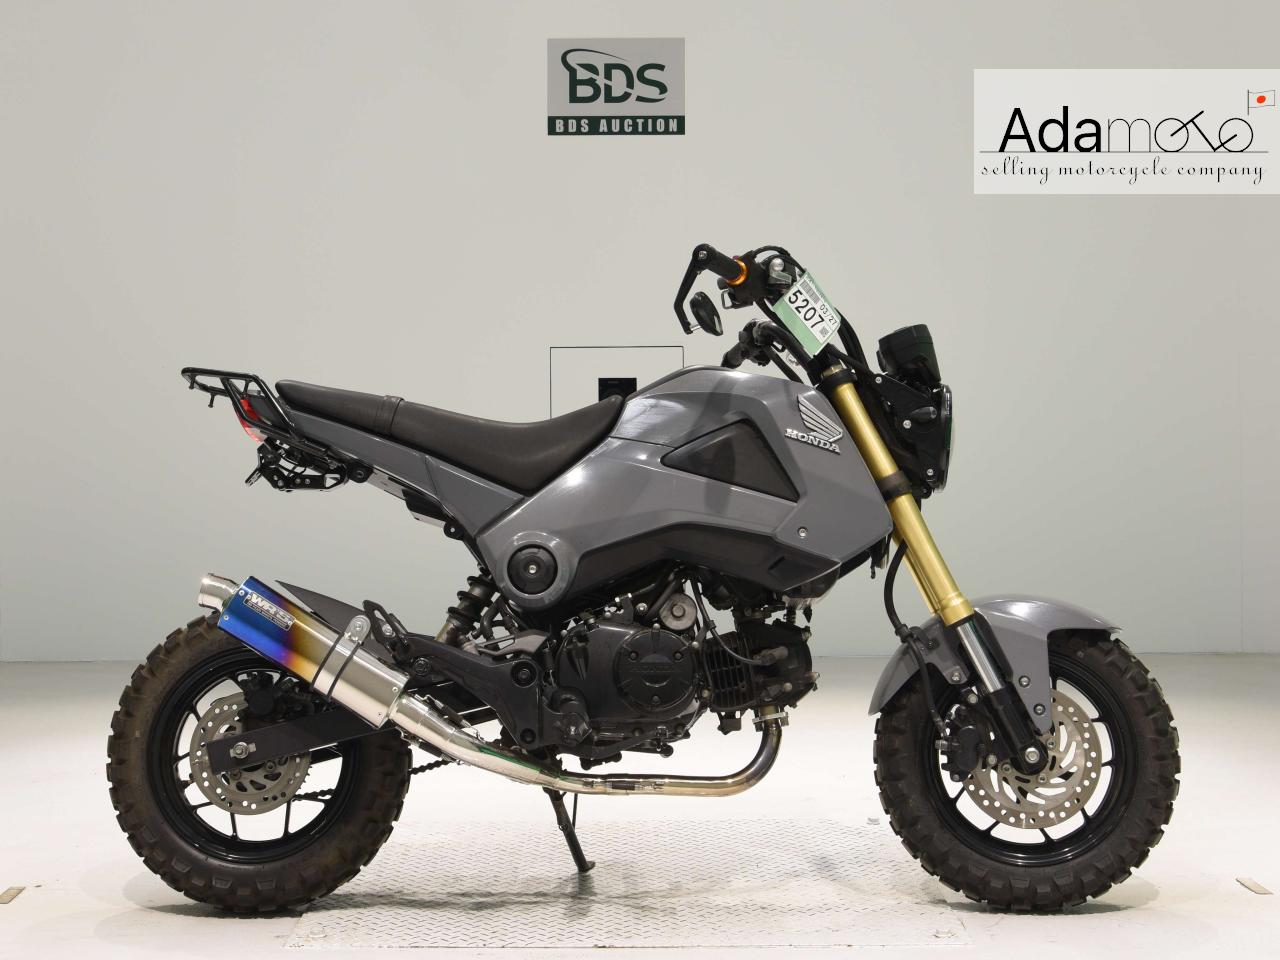 Honda Grom - Adamoto - Motorcycles from Japan